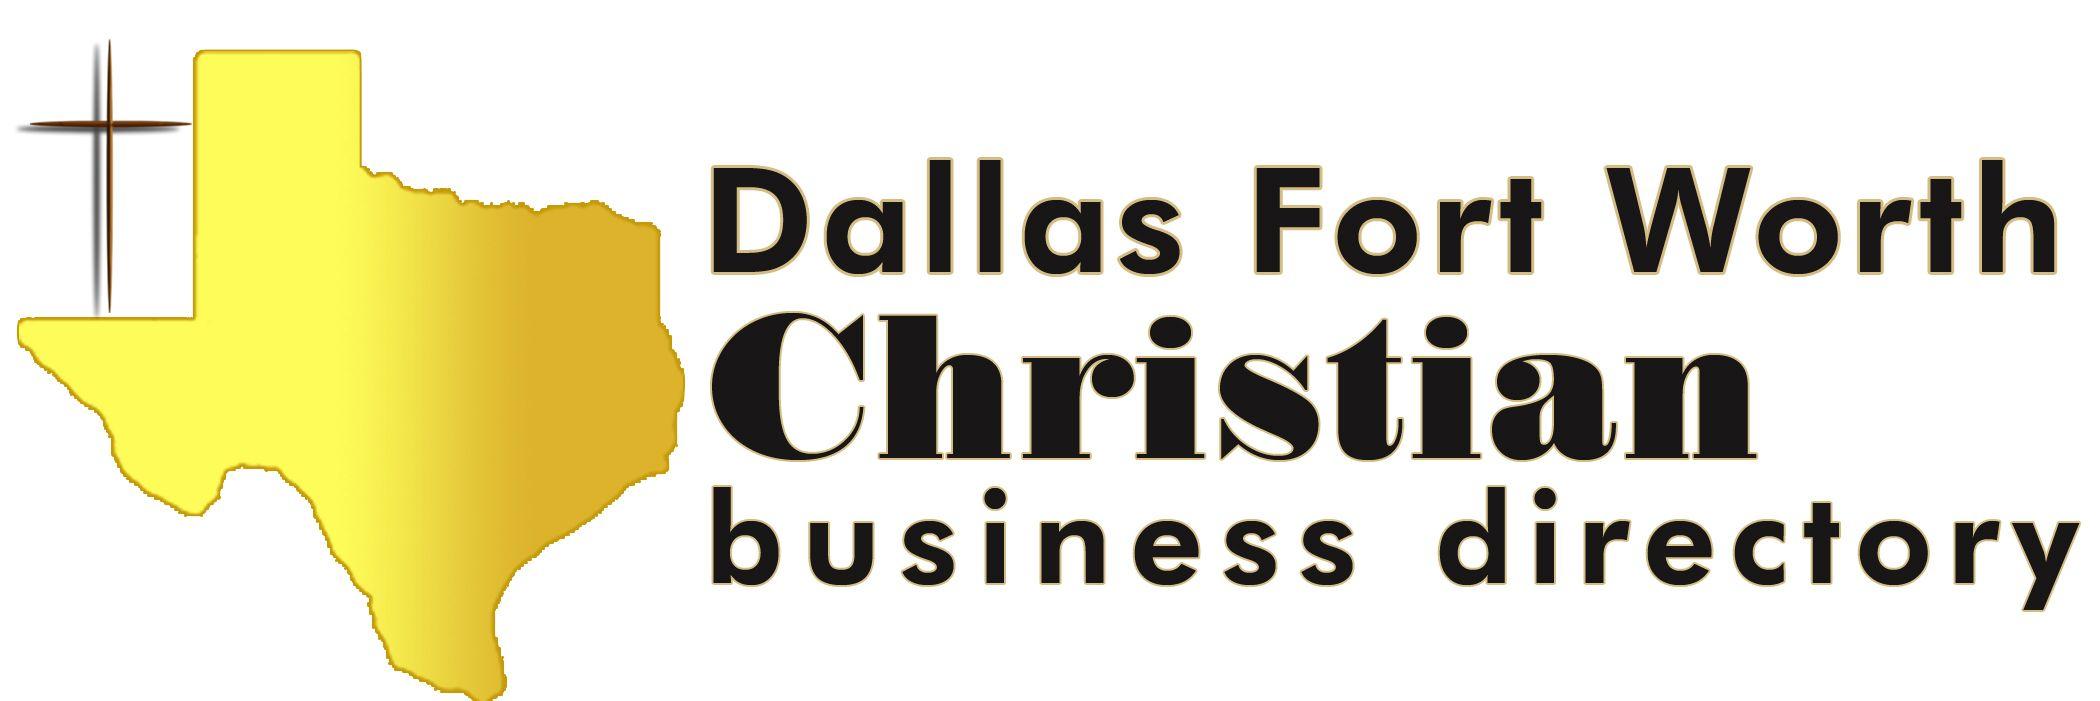 Christian Business Logo - Business Directory | Dallas Fort Worth Christian Business Directory